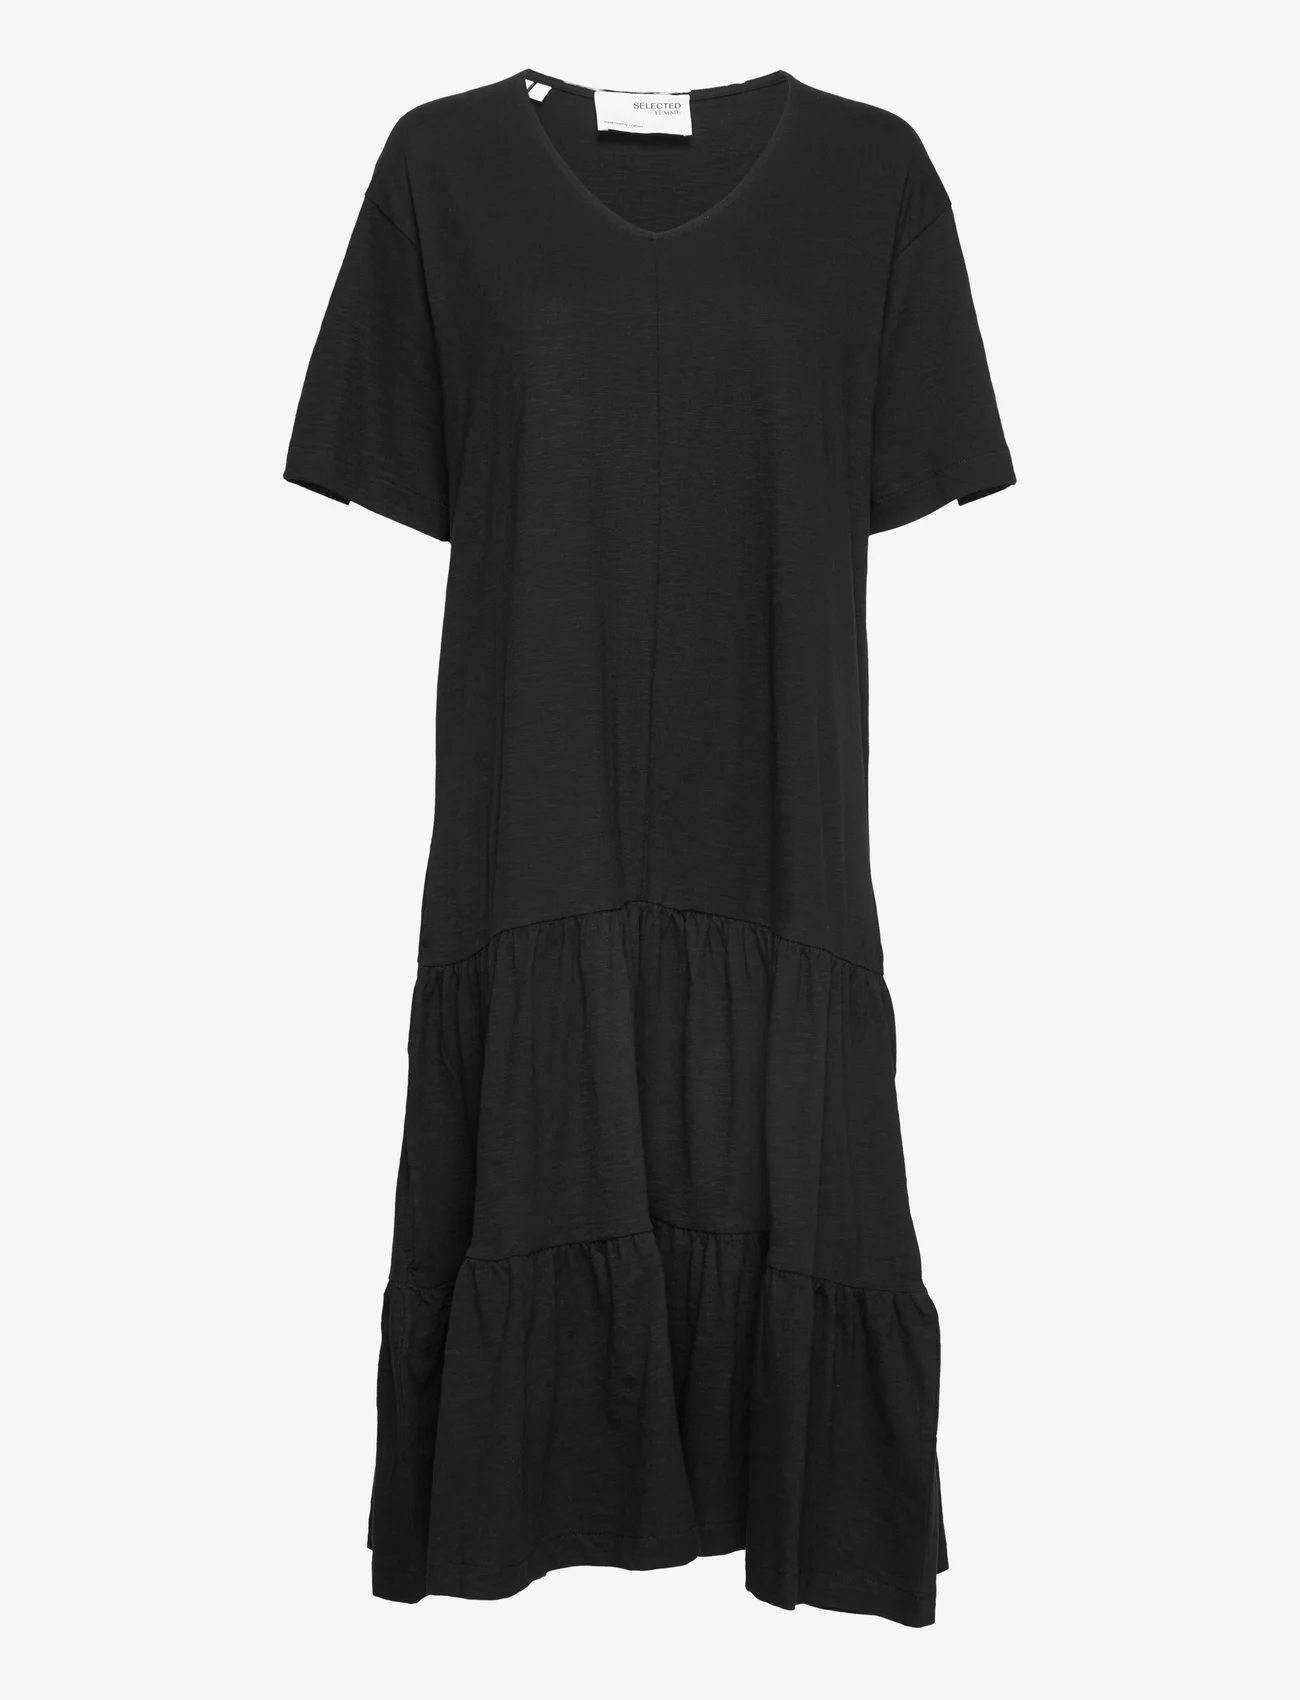 Selected Femme - SLFREED 2/4 MIDI DRESS M - t-shirtklänningar - black - 0